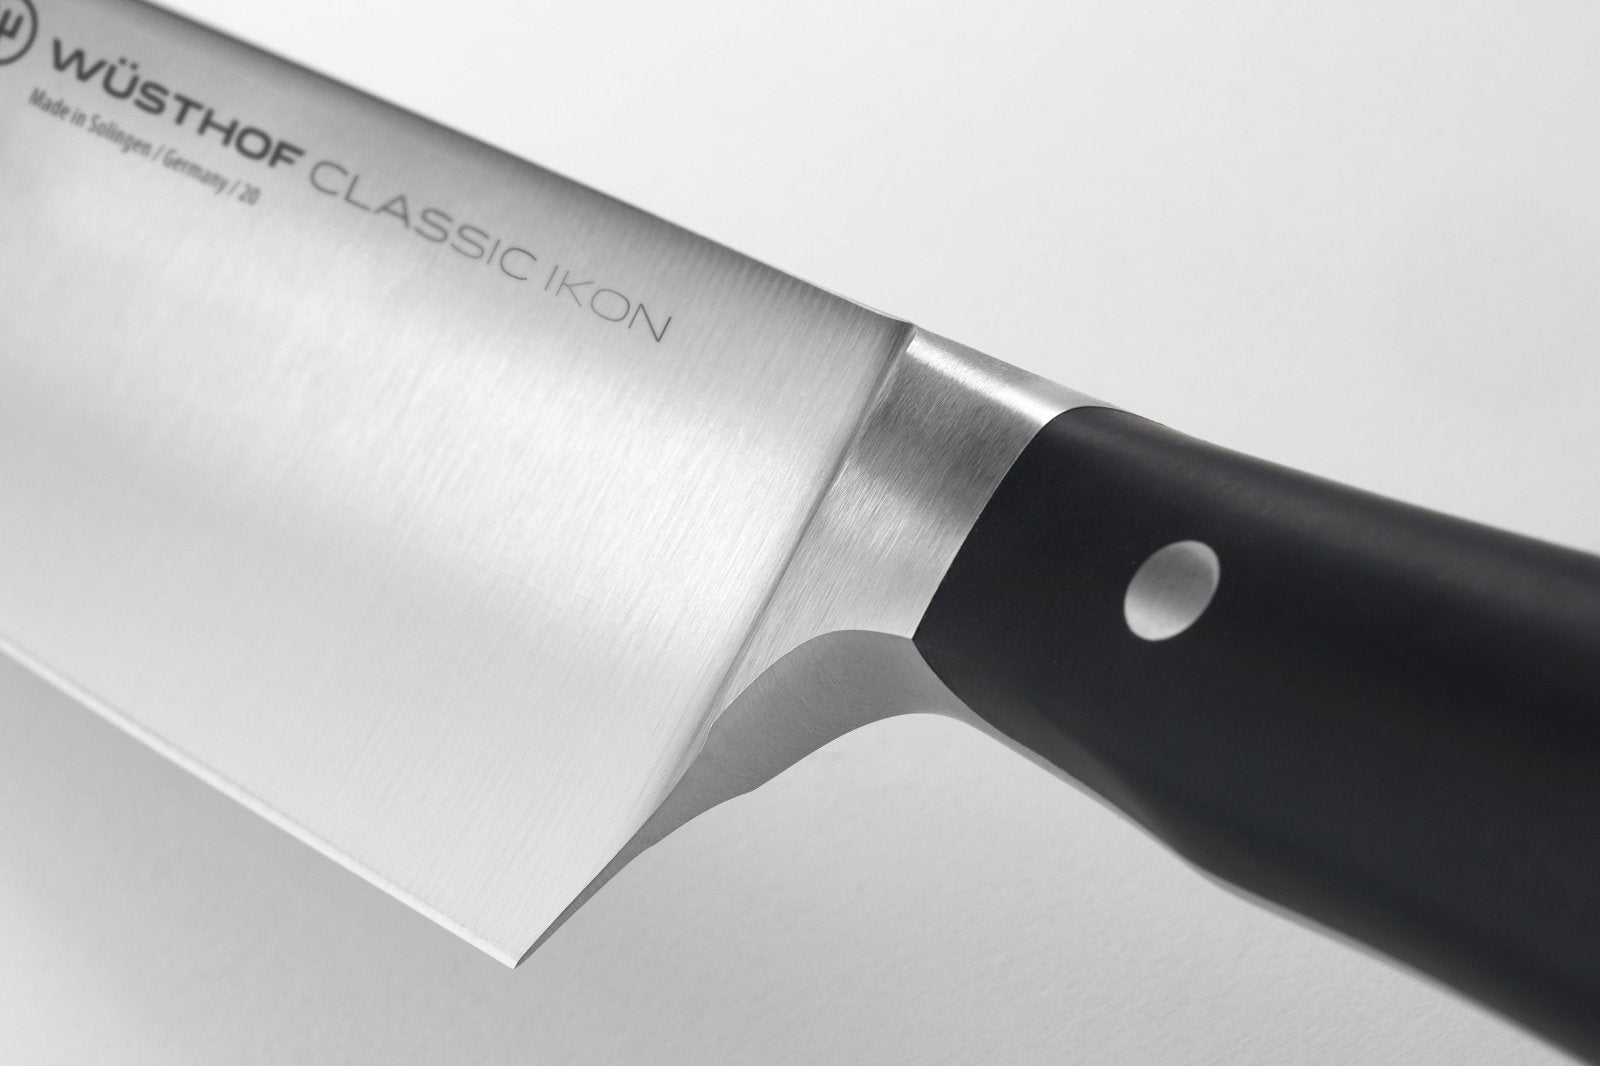 Wusthof Classic IKON 12cm Utility Knife - WT1040330412 - The Cotswold Knife Company